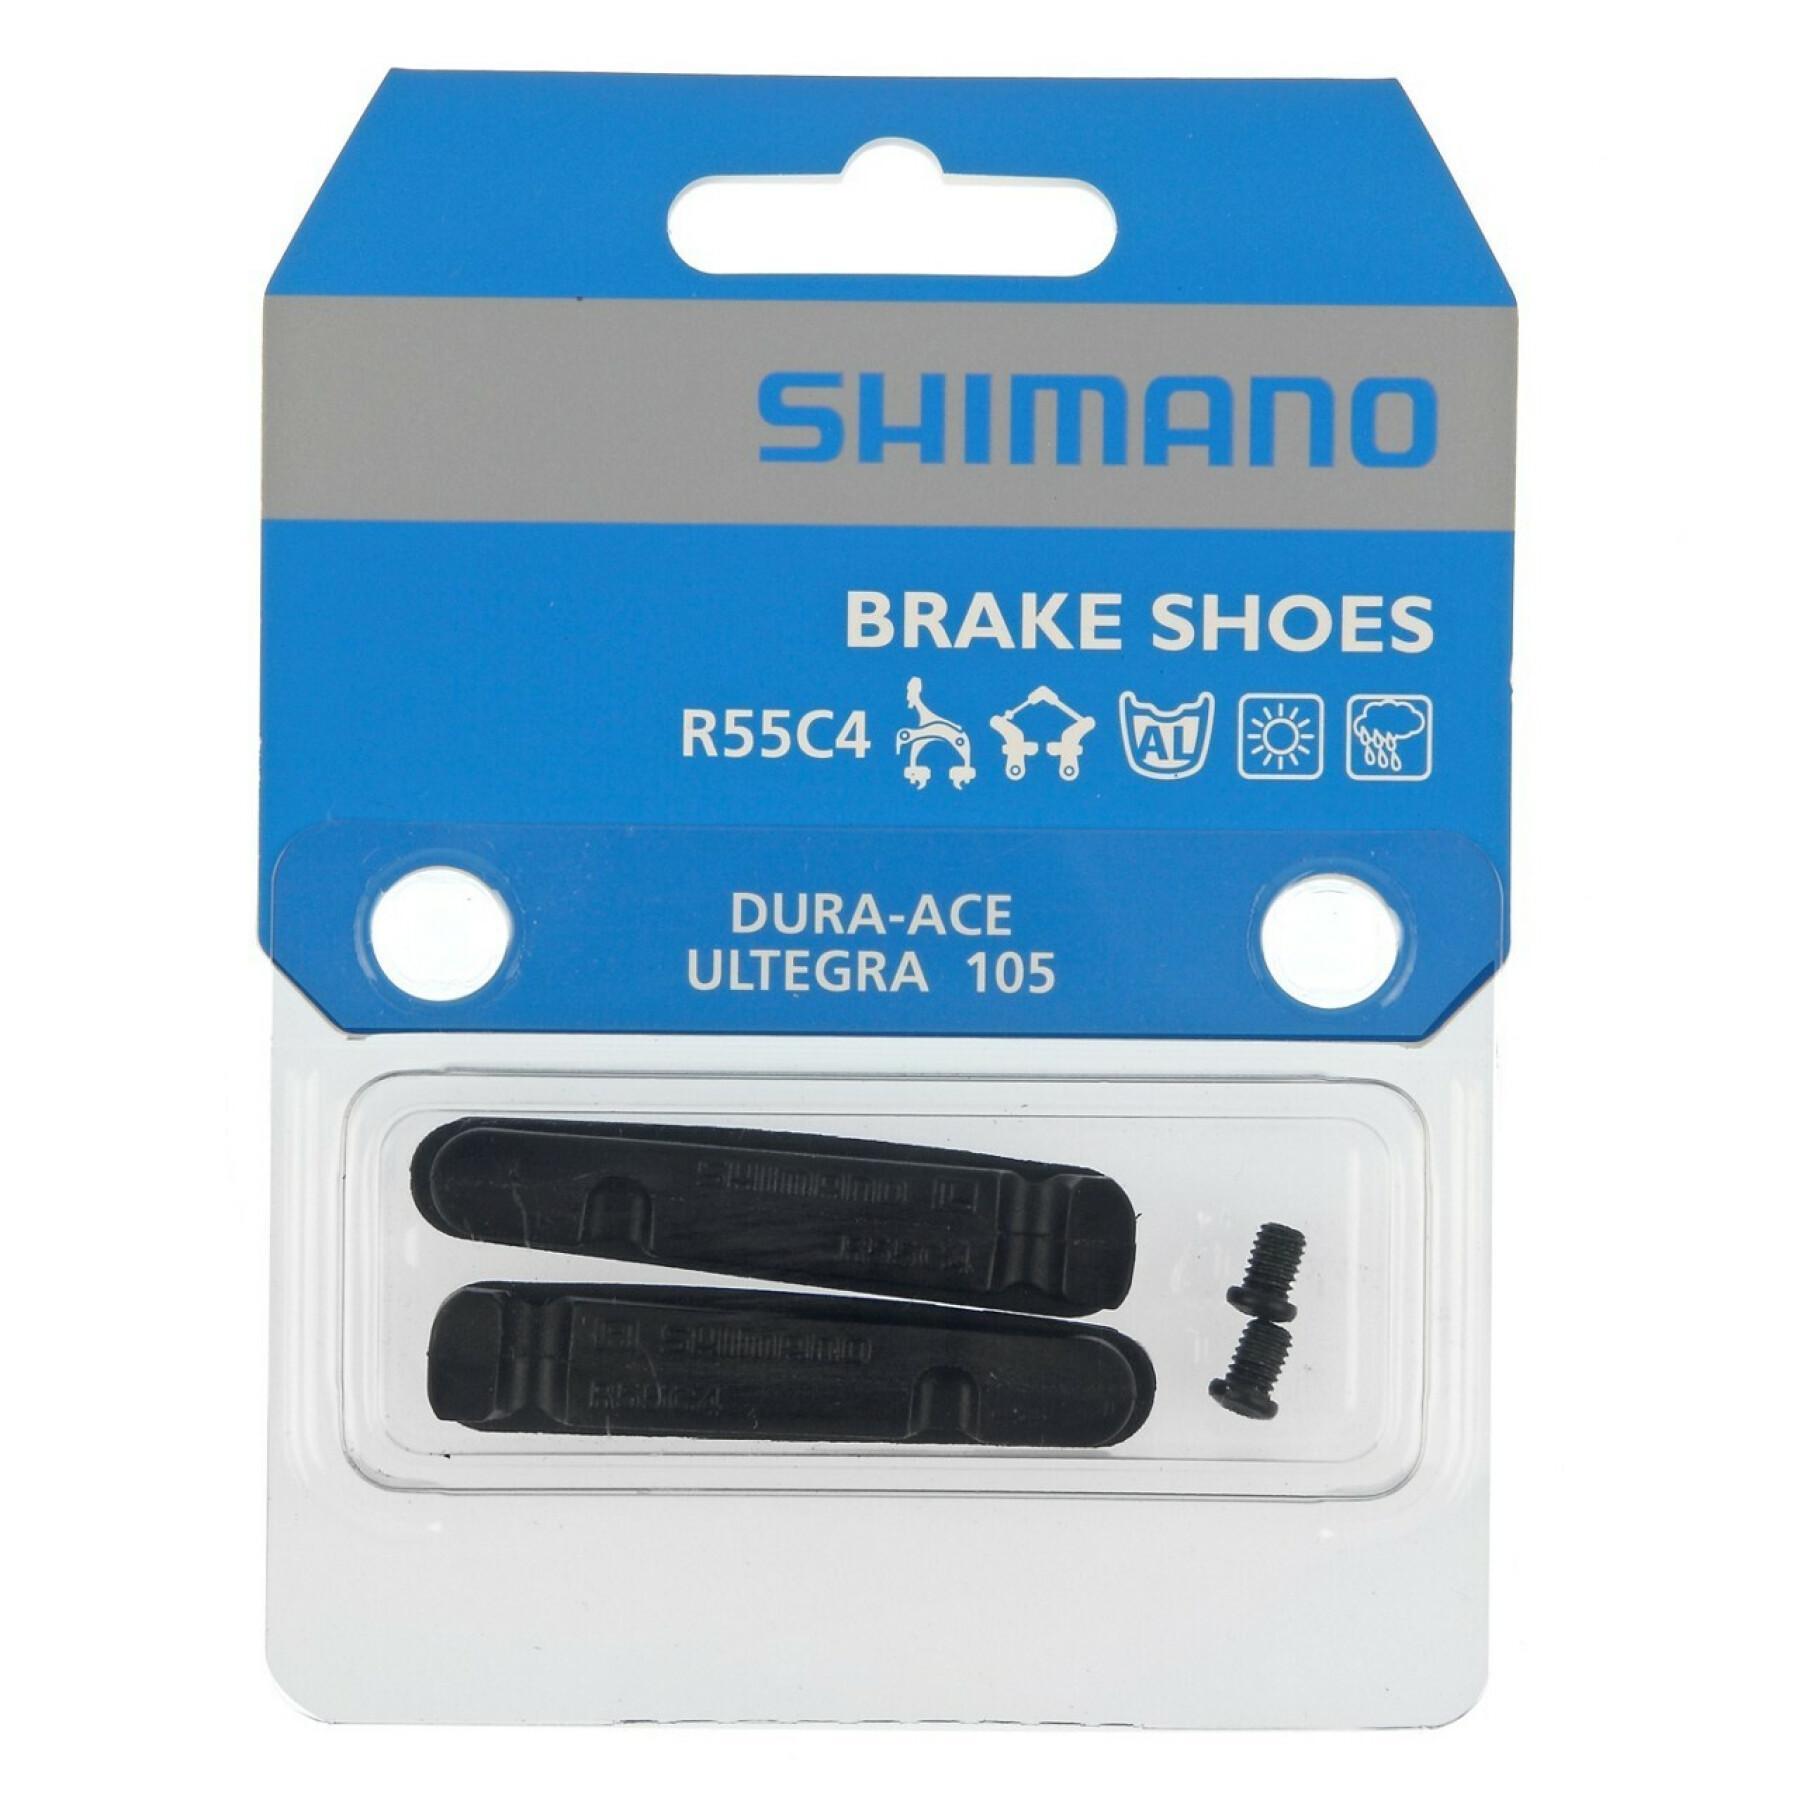 Patroontype slipset Shimano R55C4